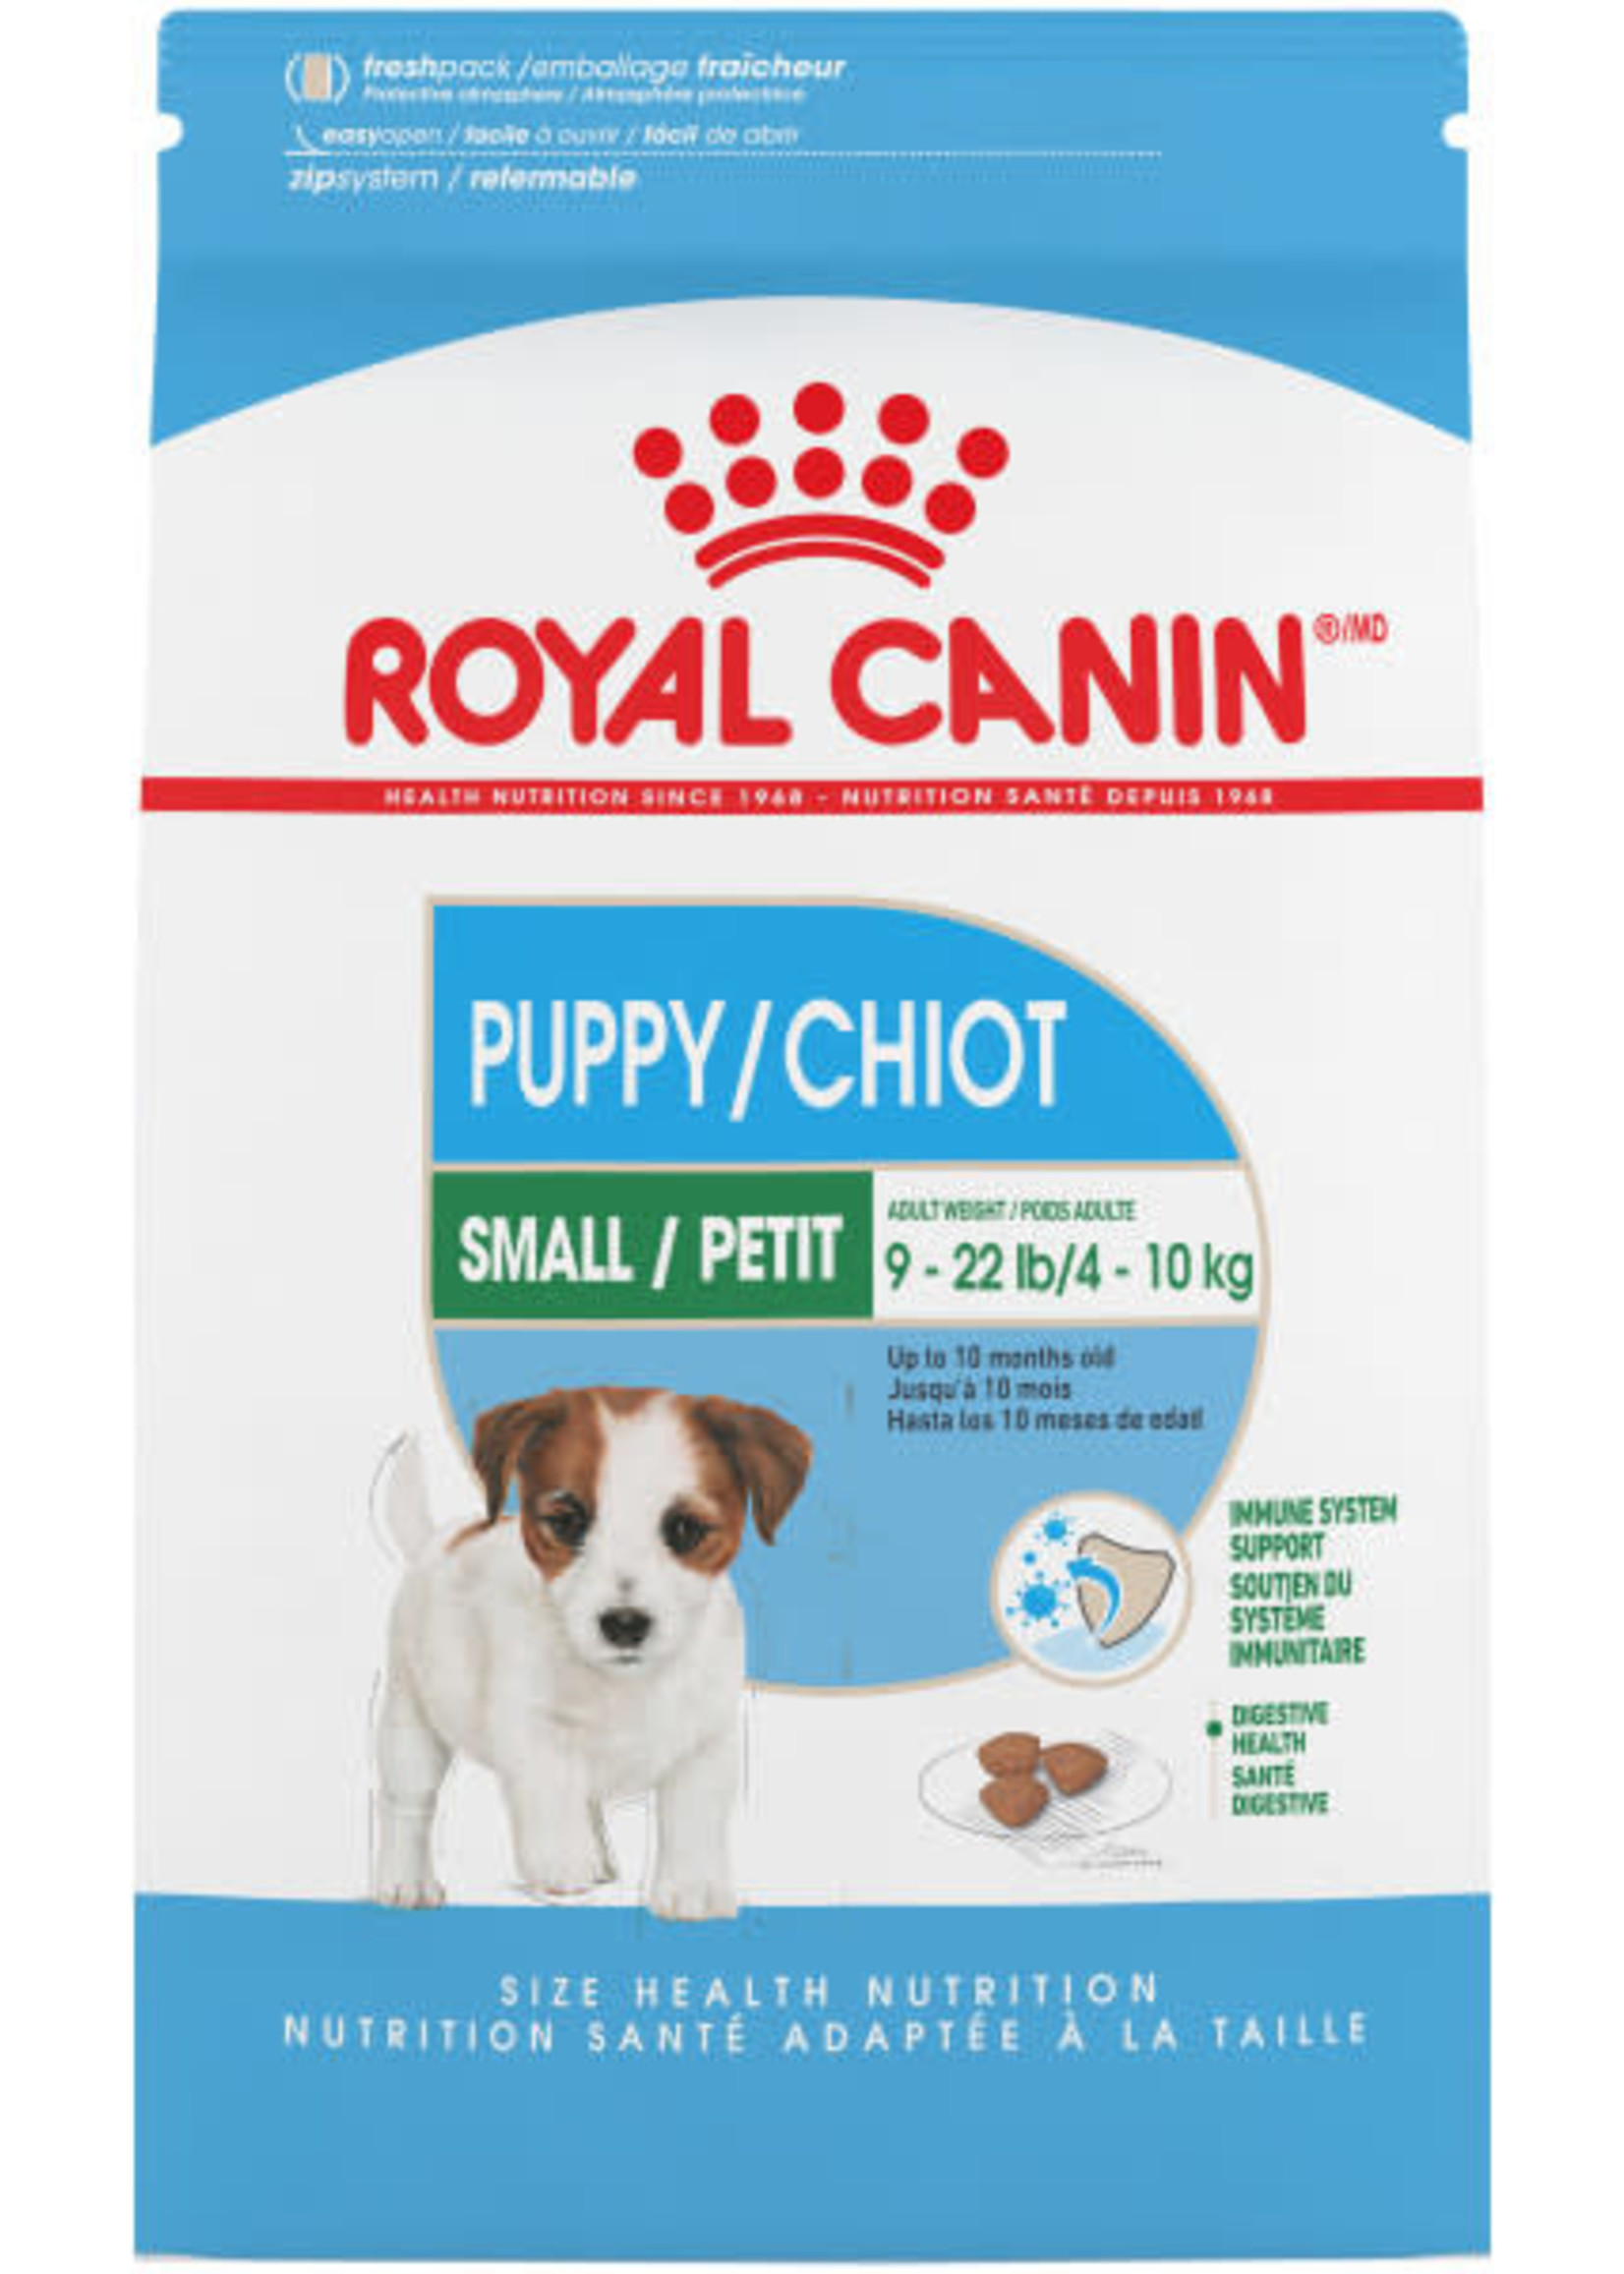 Royal Canin® Royal Canin Dog Small Puppy 14lb